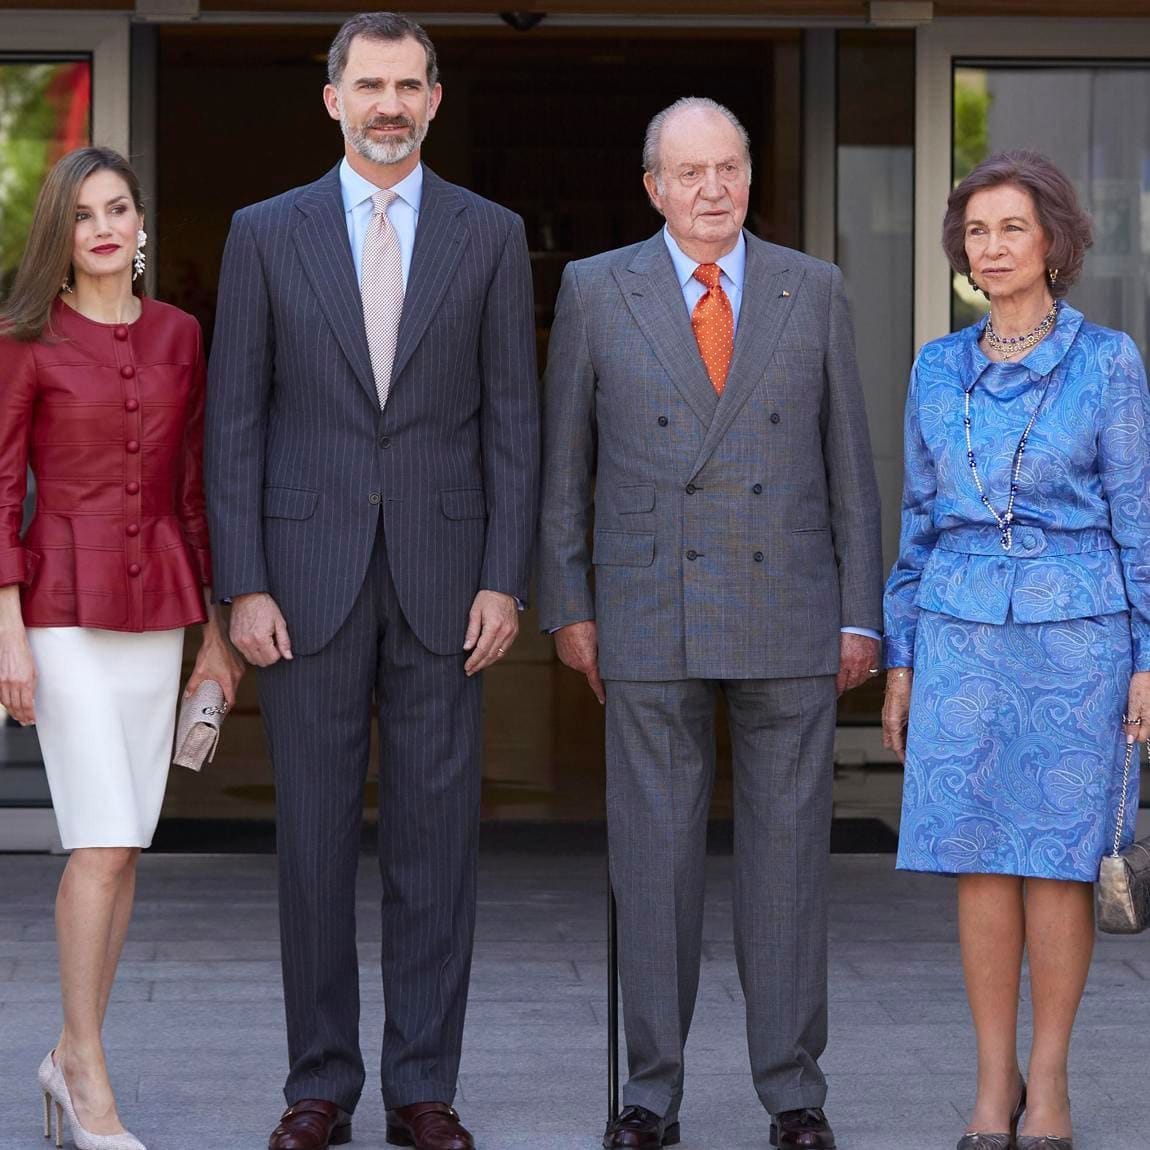 King Felipe's father announced he is leaving Spain